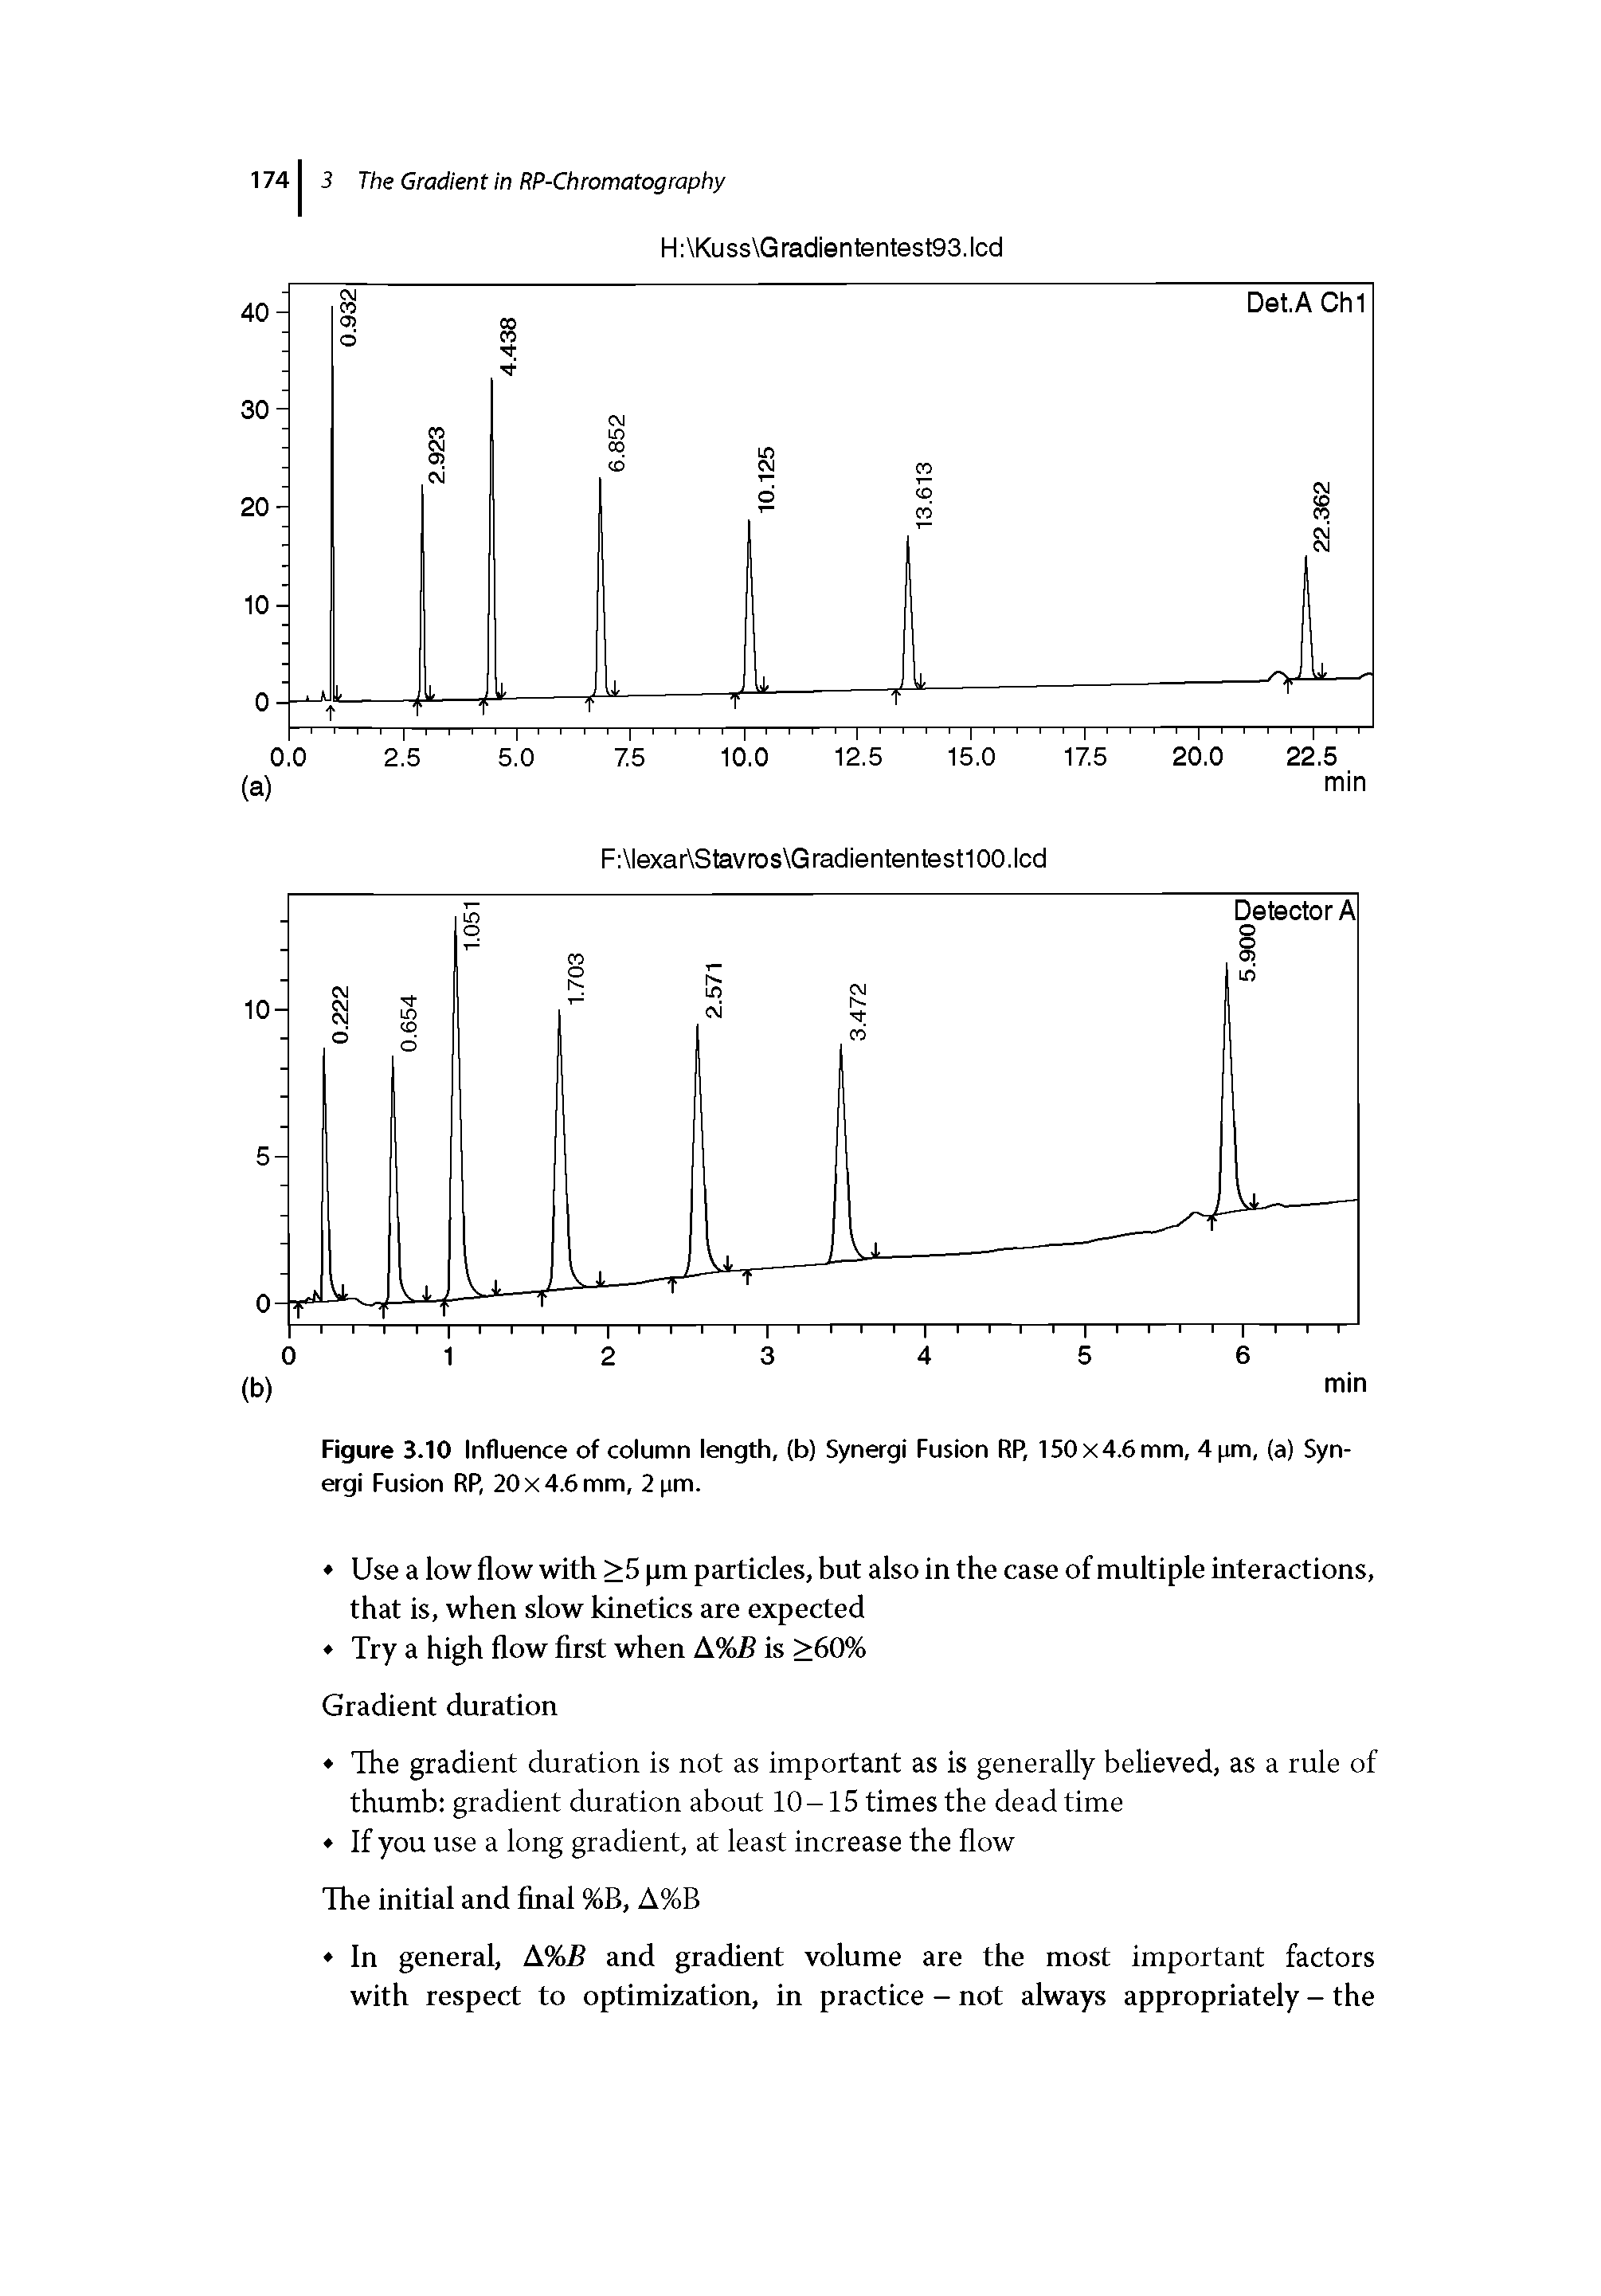 Figure 3.10 Influence of column length, (b) Synergi Fusion RP, 150x4.6mm, 4 im, (a) Syn-ergi Fusion RP, 20x4.6 mm, 2 jm.